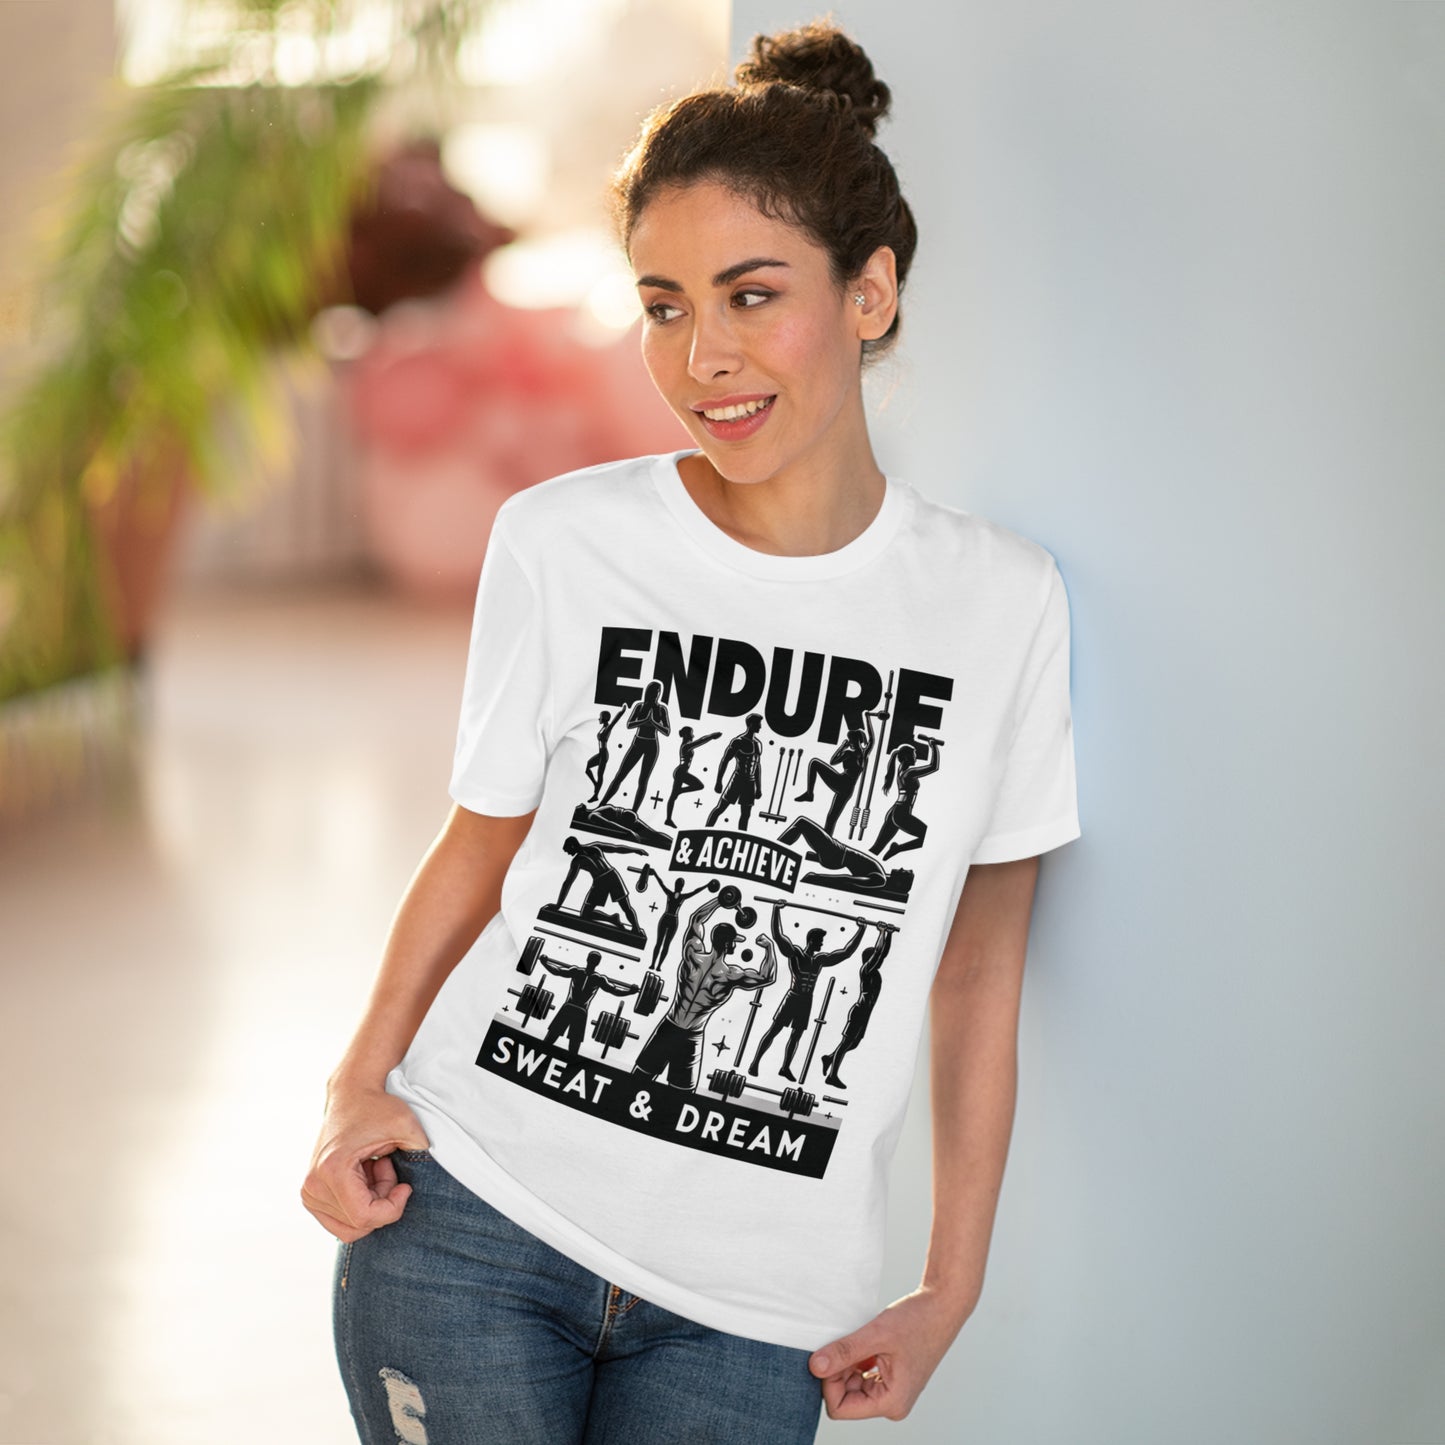 Resilience Rally Tee "ENDURE ACHIEVE SWEAT & DREAM" T-shirt - Unisex